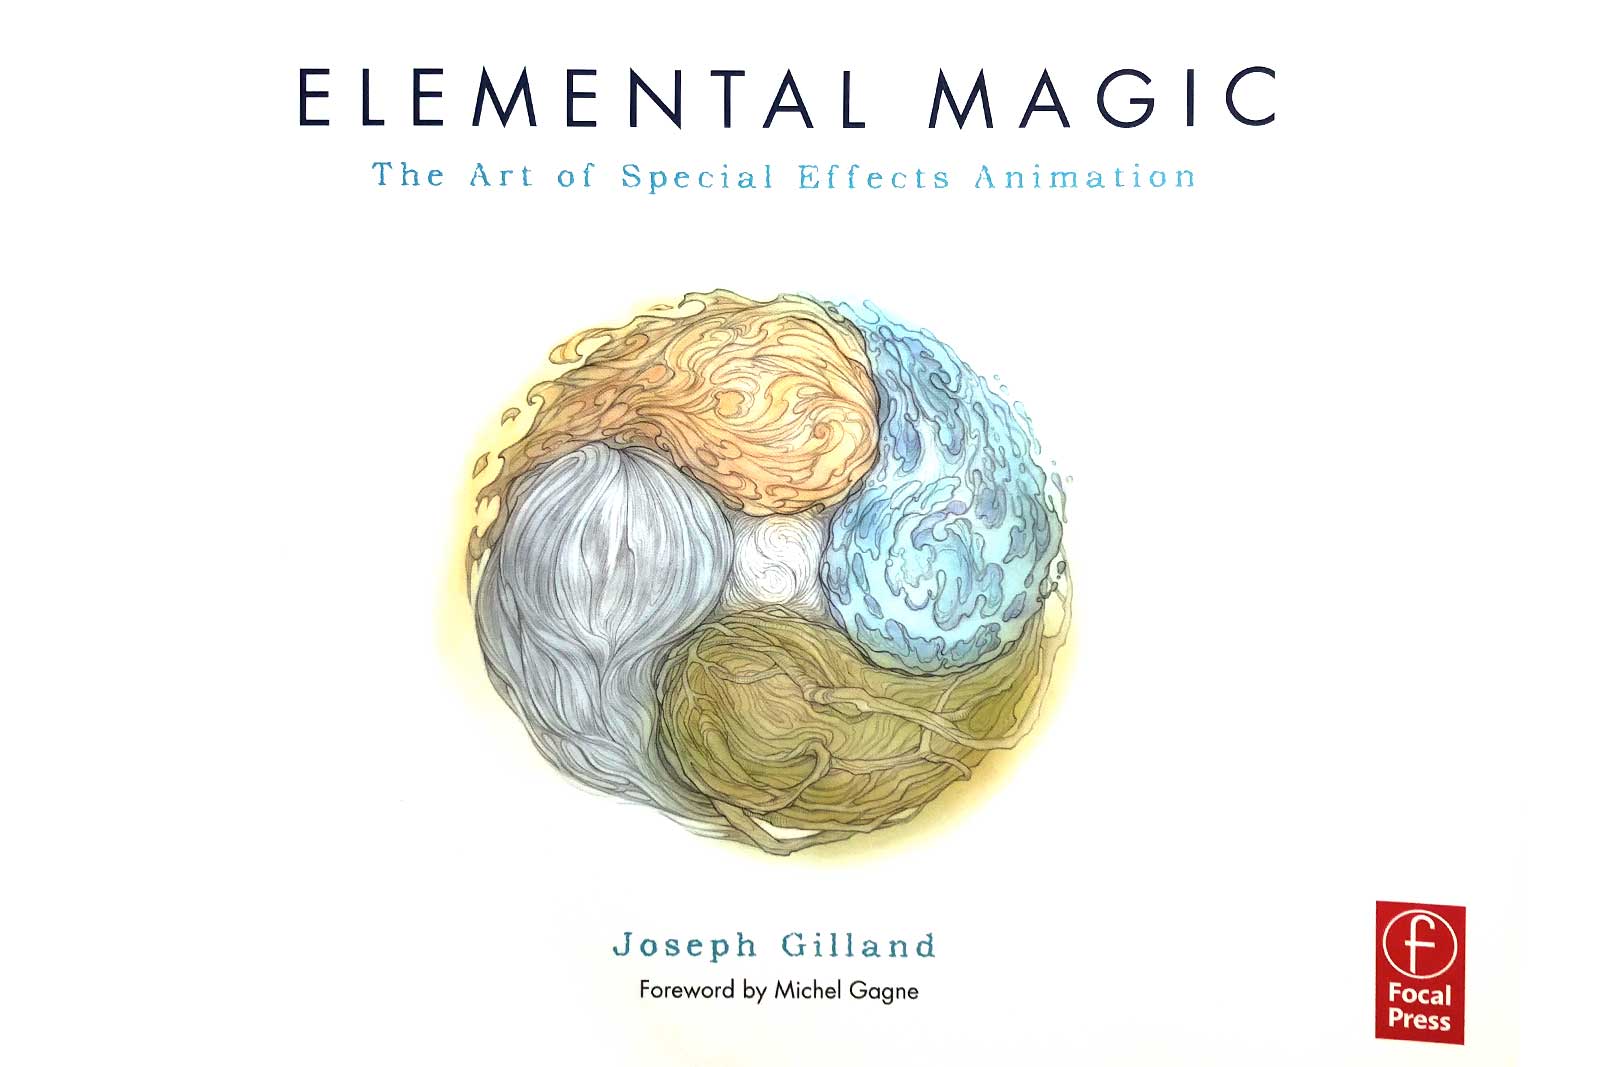 Elemental magic